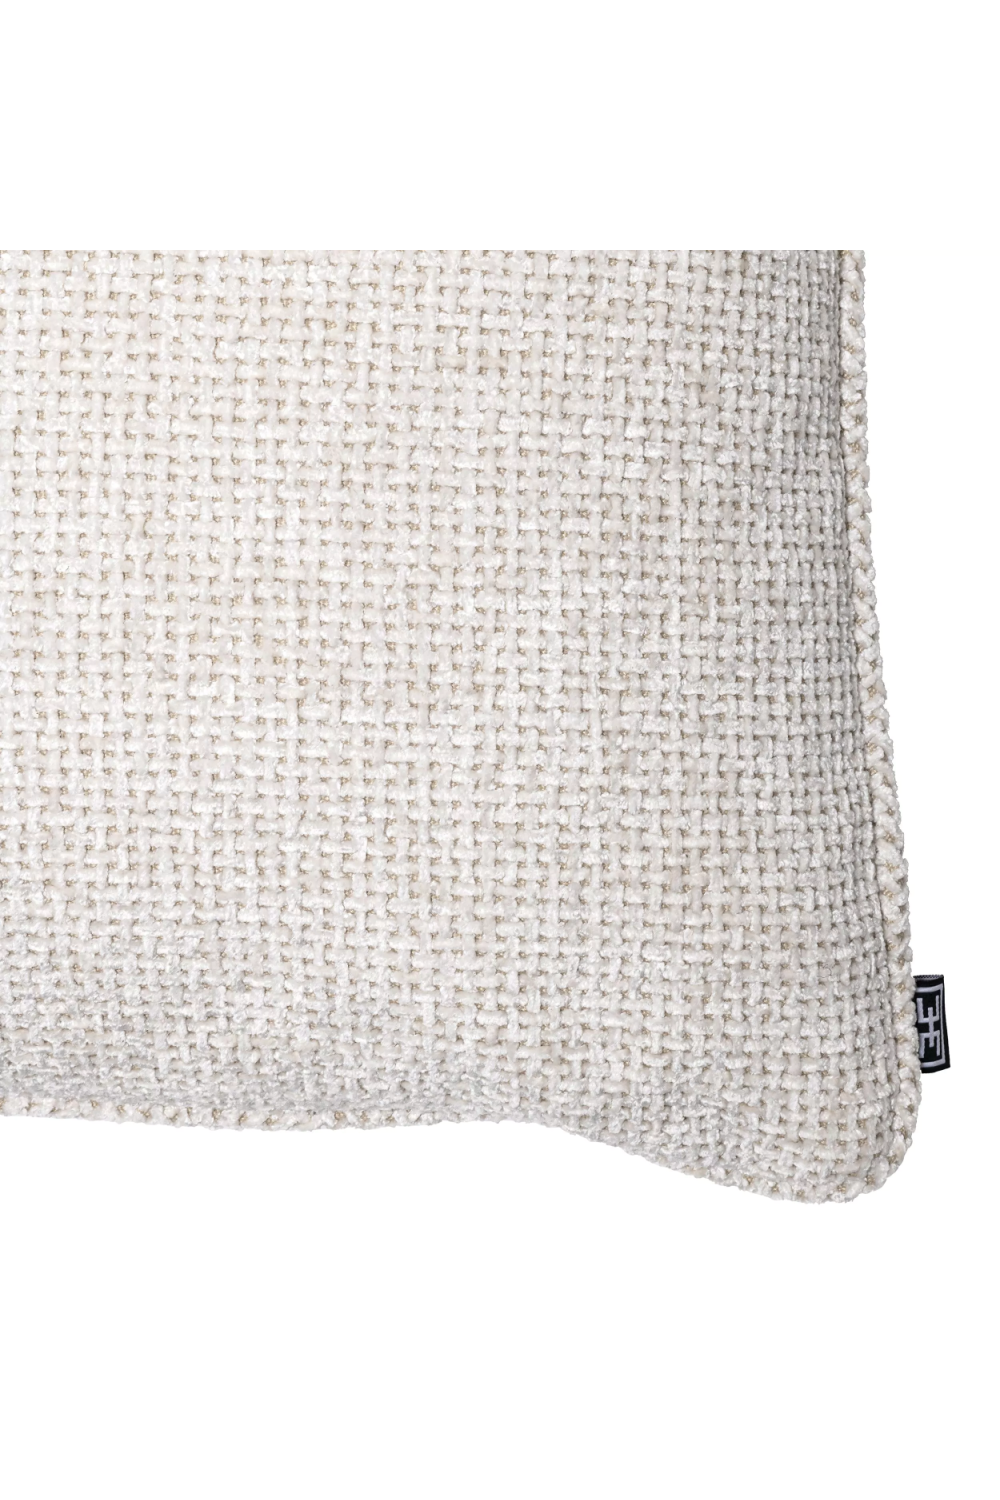 Rectangular White Cushion | Eichholtz Lyssa | Oroa.com